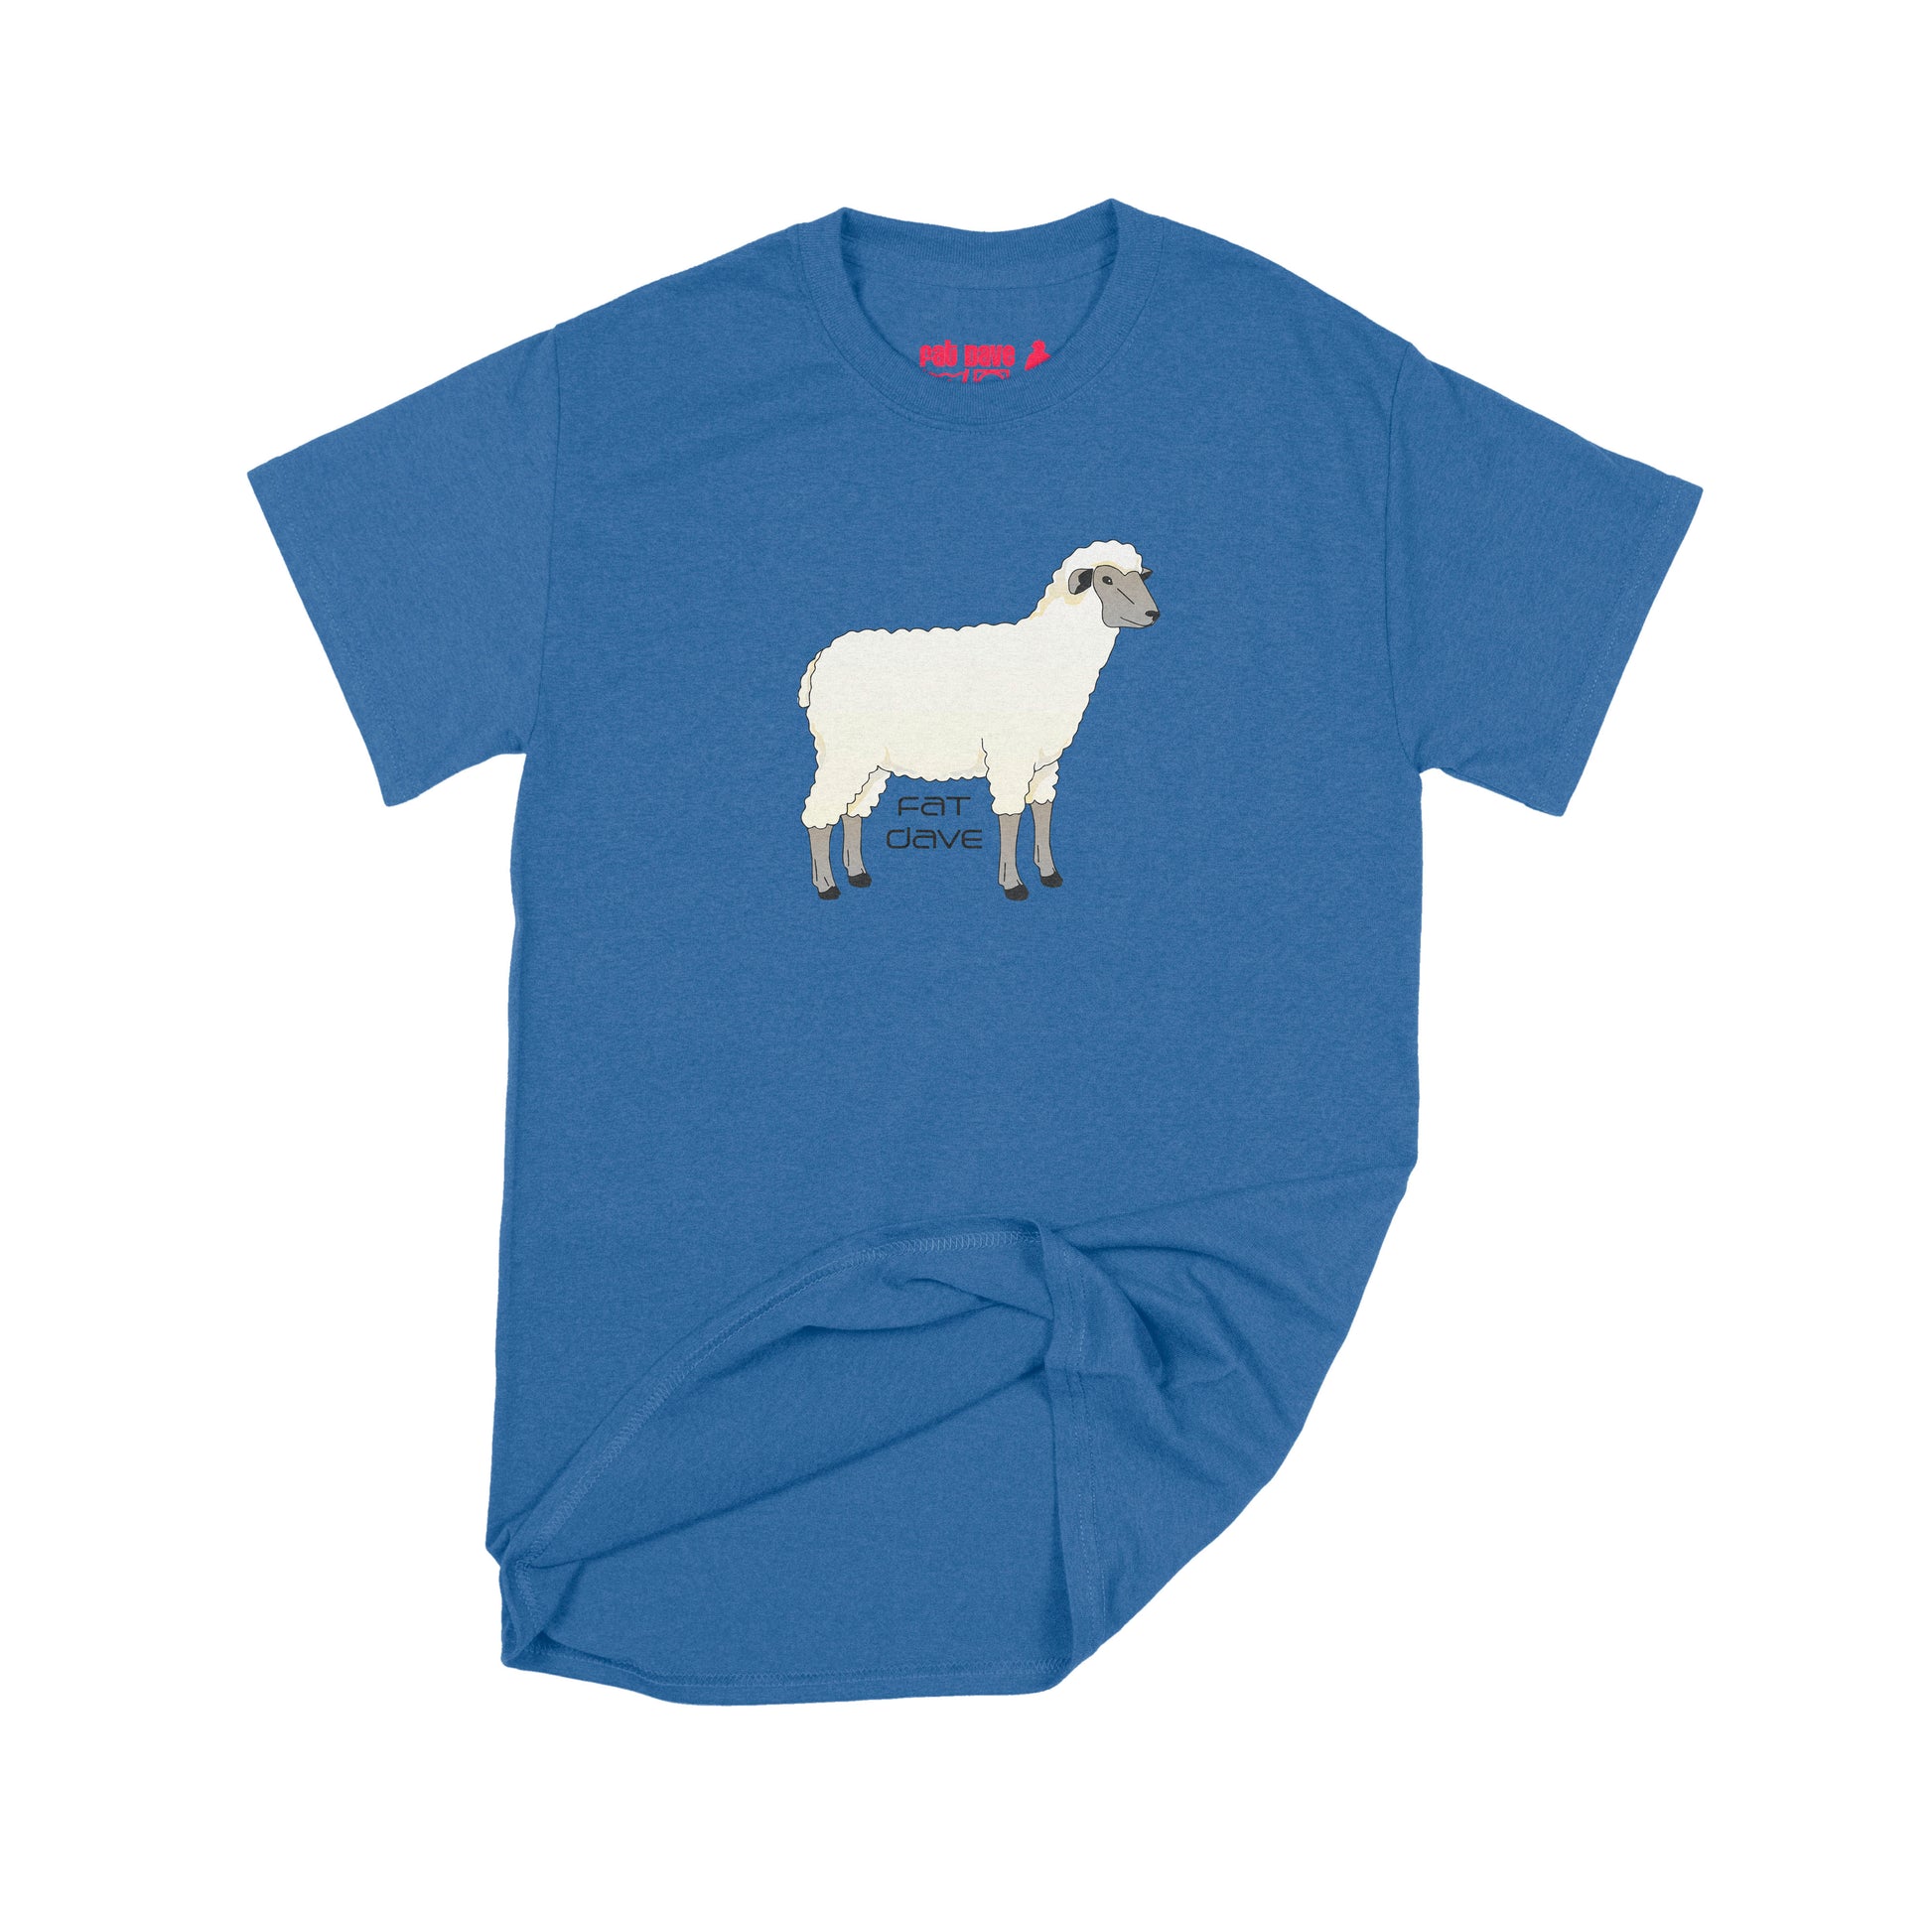 Brantford, Business, Fat Dave, Sheep, T-Shirt, Royal Blue